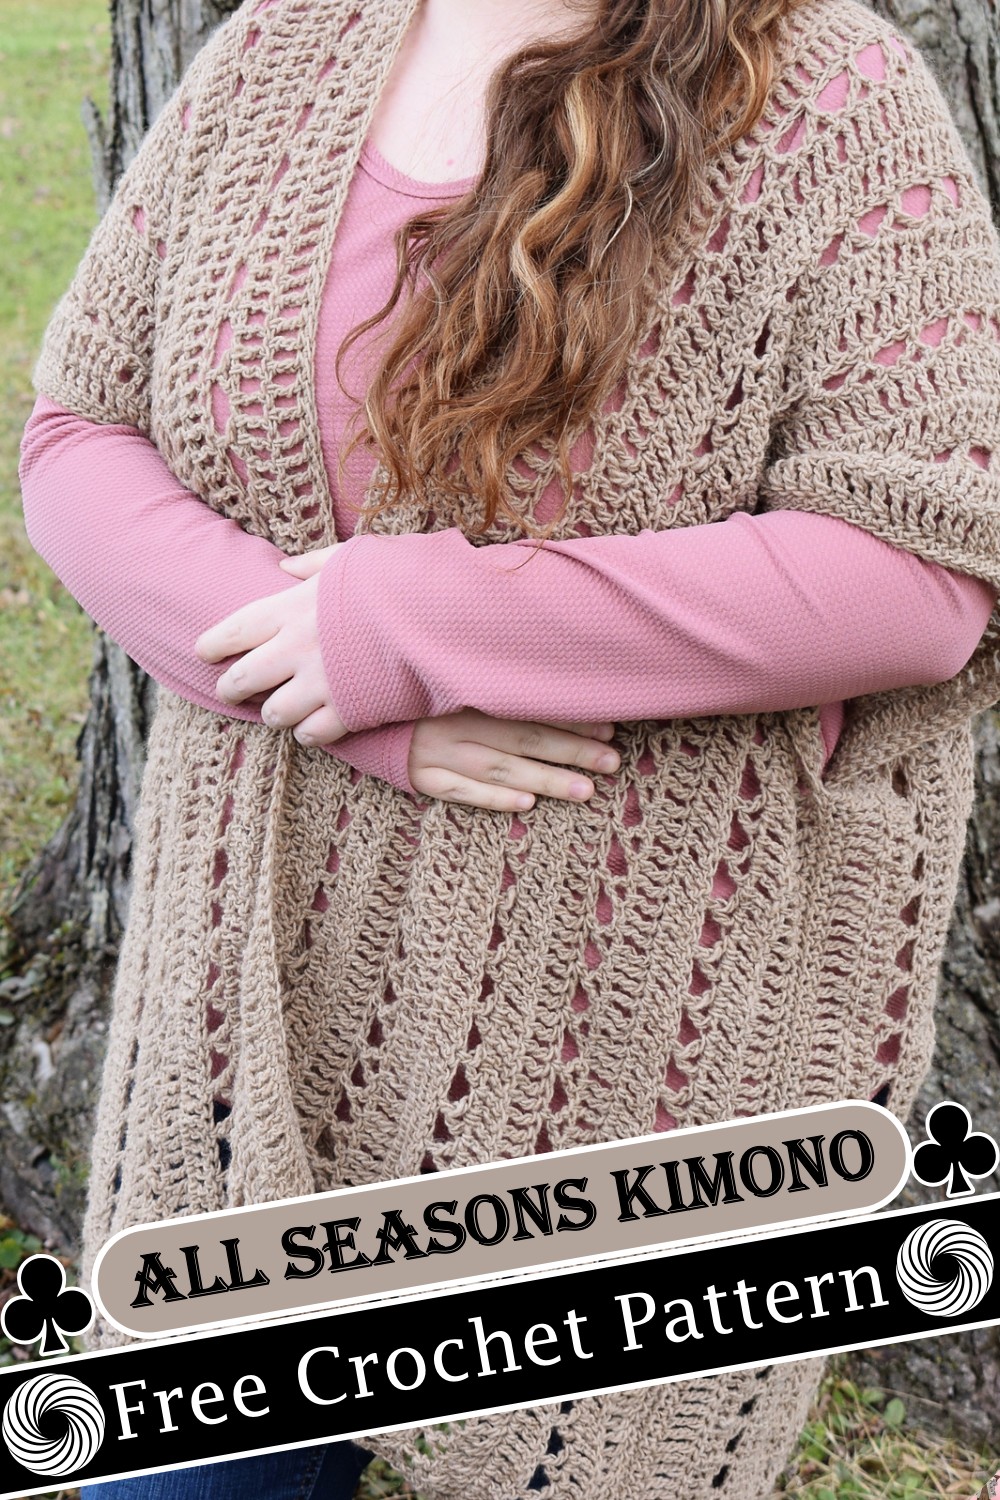 All Seasons Kimono